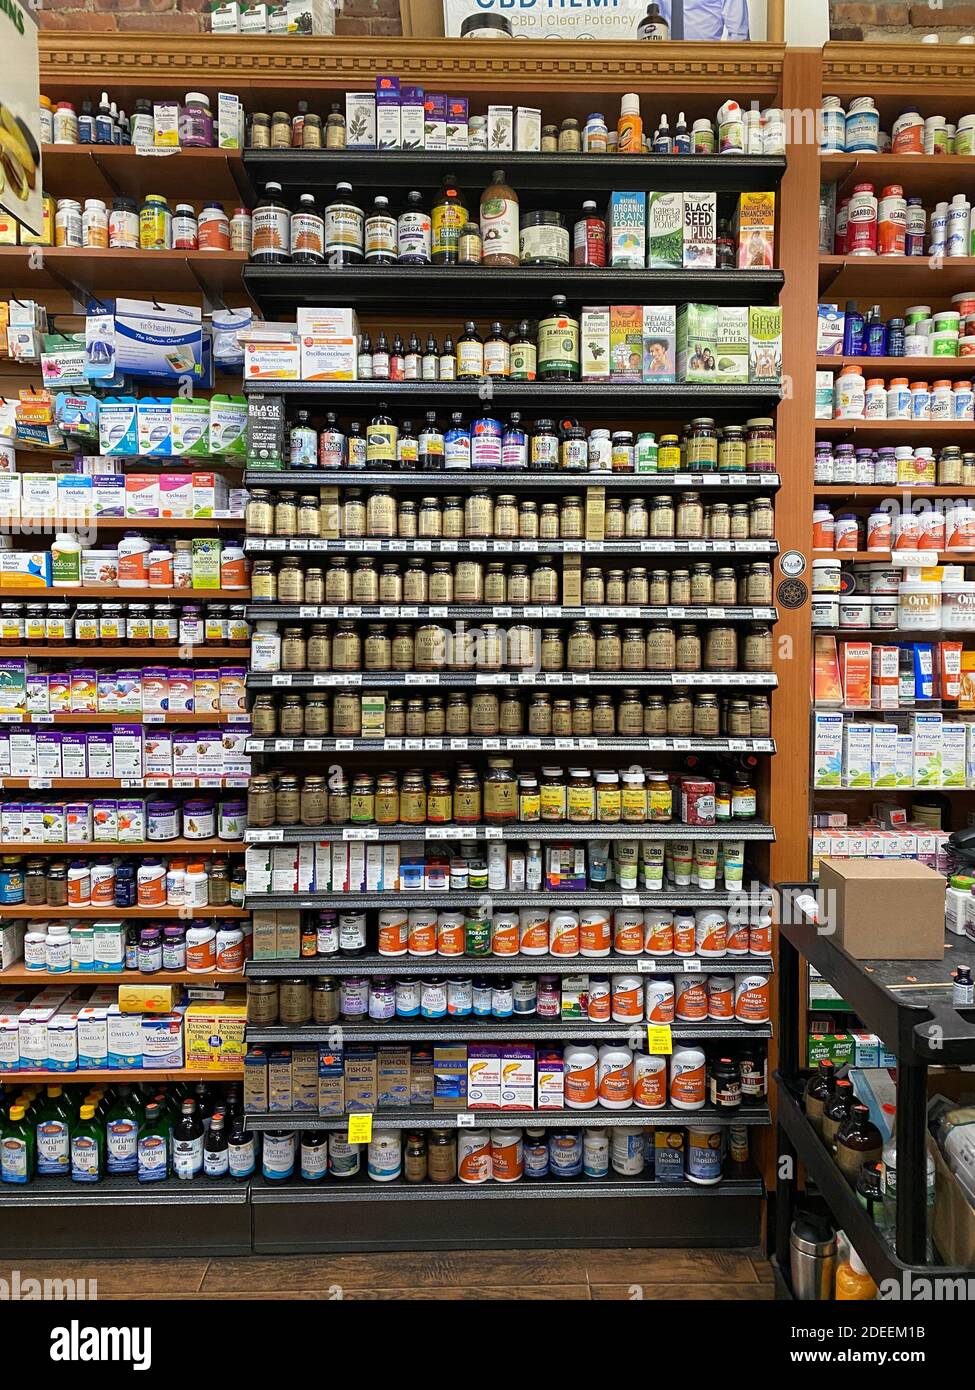 https://c8.alamy.com/comp/2DEEM1B/vitamins-and-supplements-display-at-a-healthfood-store-in-brooklyn-new-york-2DEEM1B.jpg